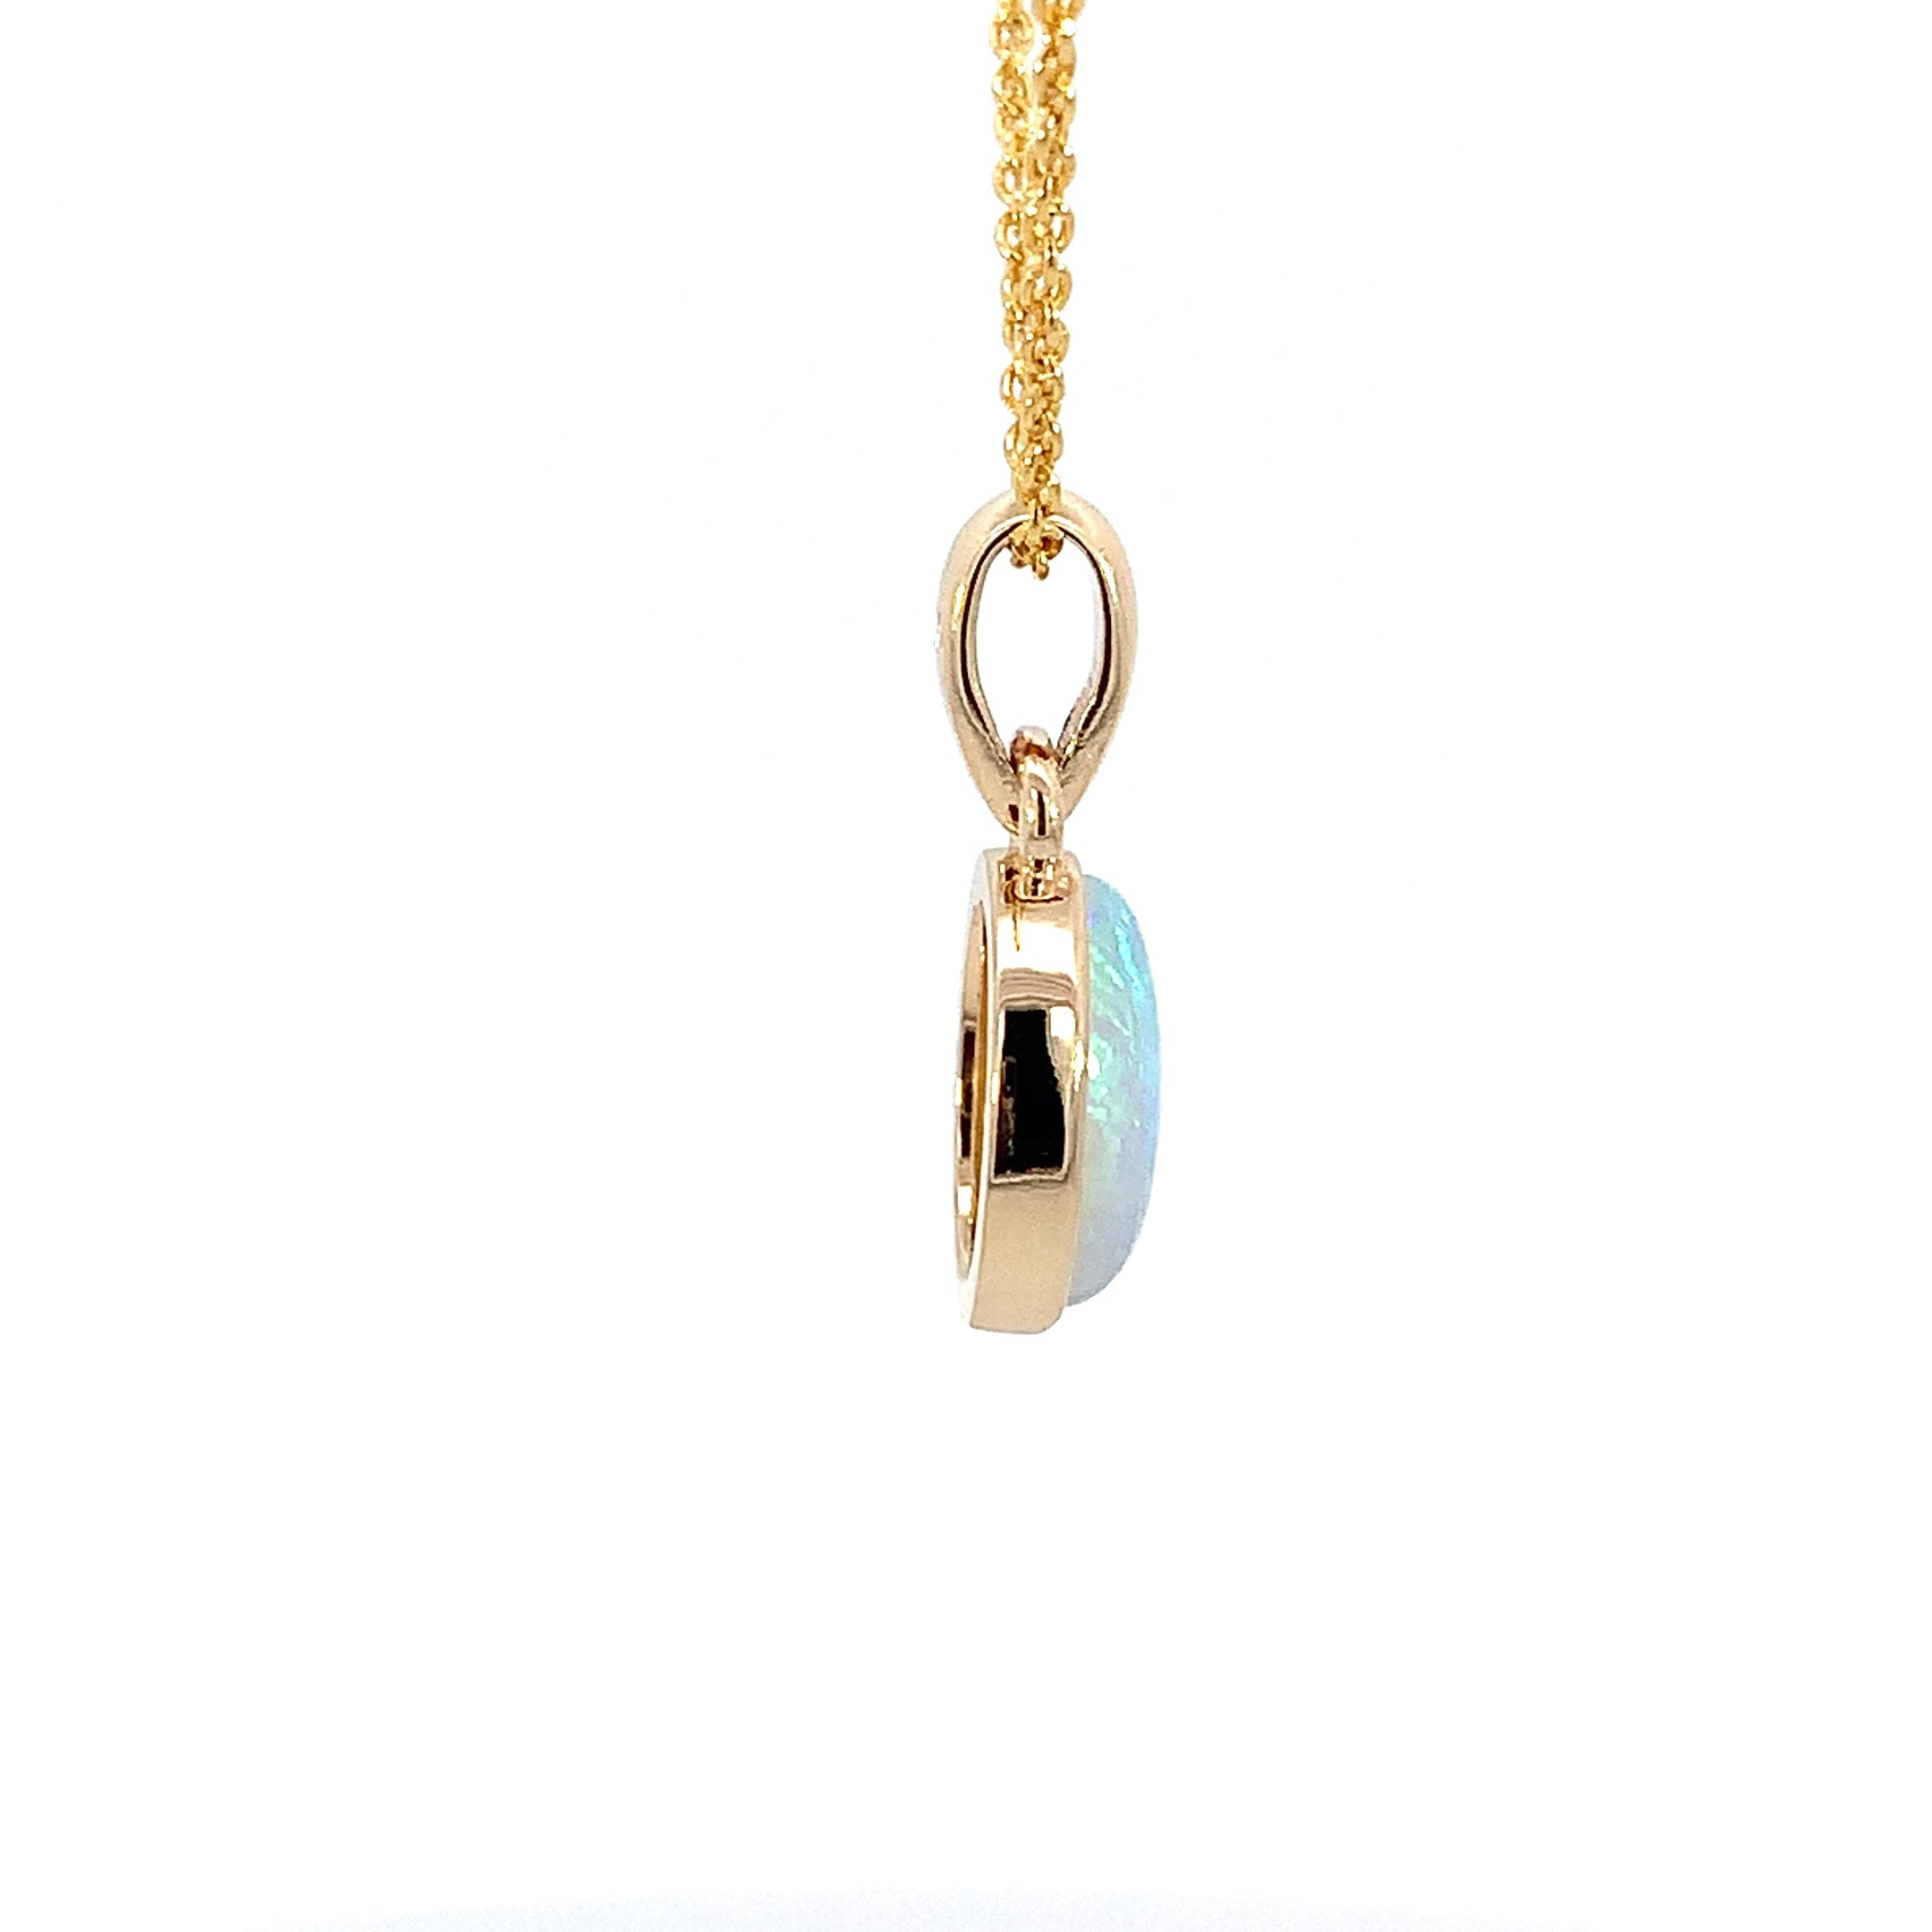 9kt Yellow Gold bezel set 8x6mm Light Opal pendant - Masterpiece Jewellery Opal & Gems Sydney Australia | Online Shop